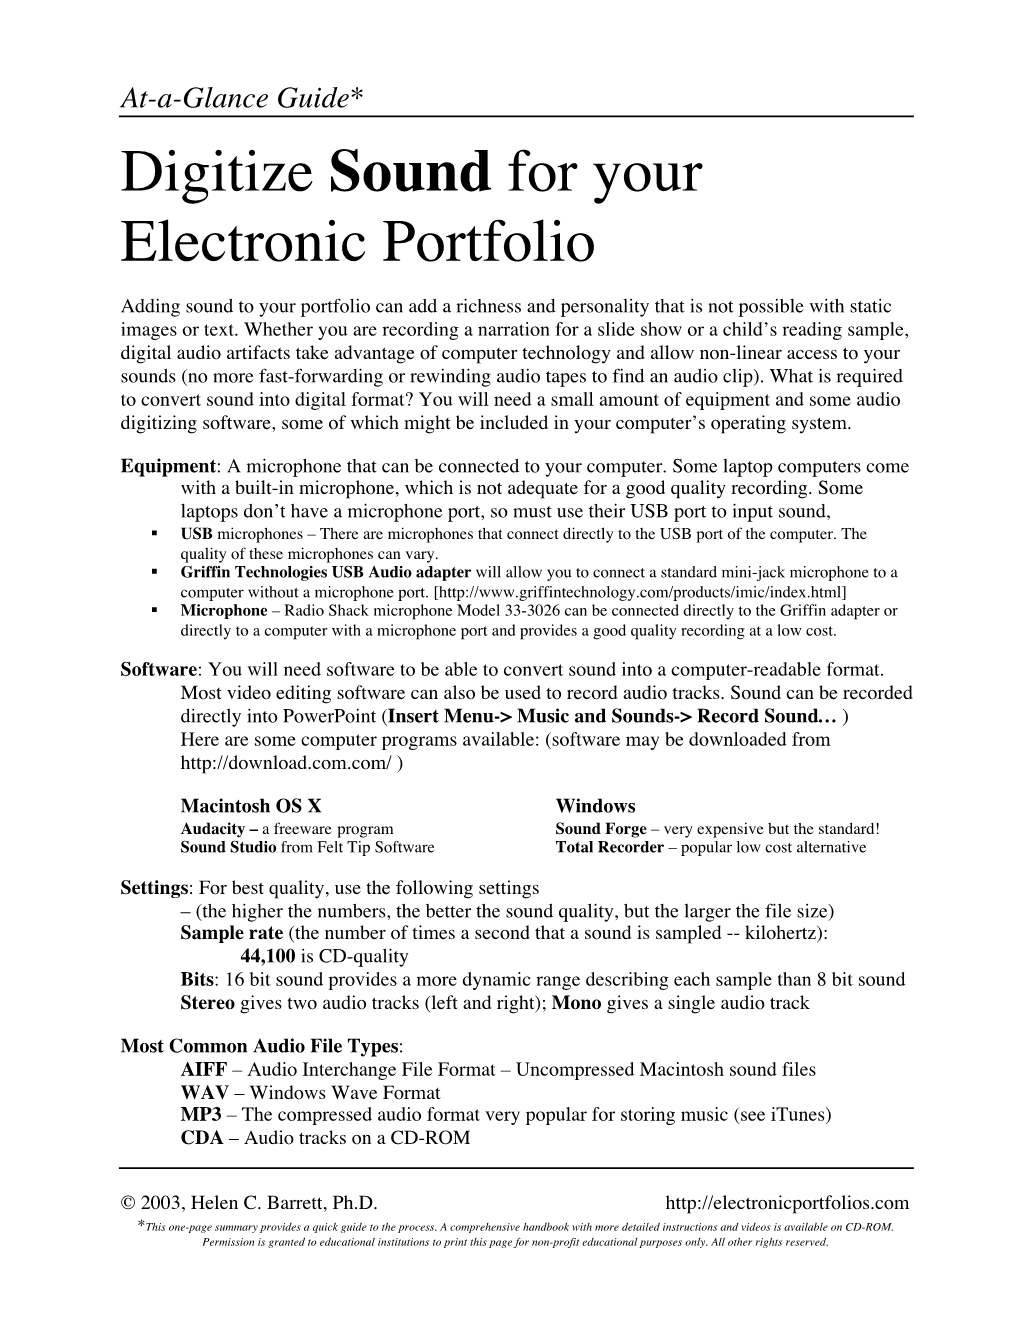 Digitize Sound for Your Electronic Portfolio